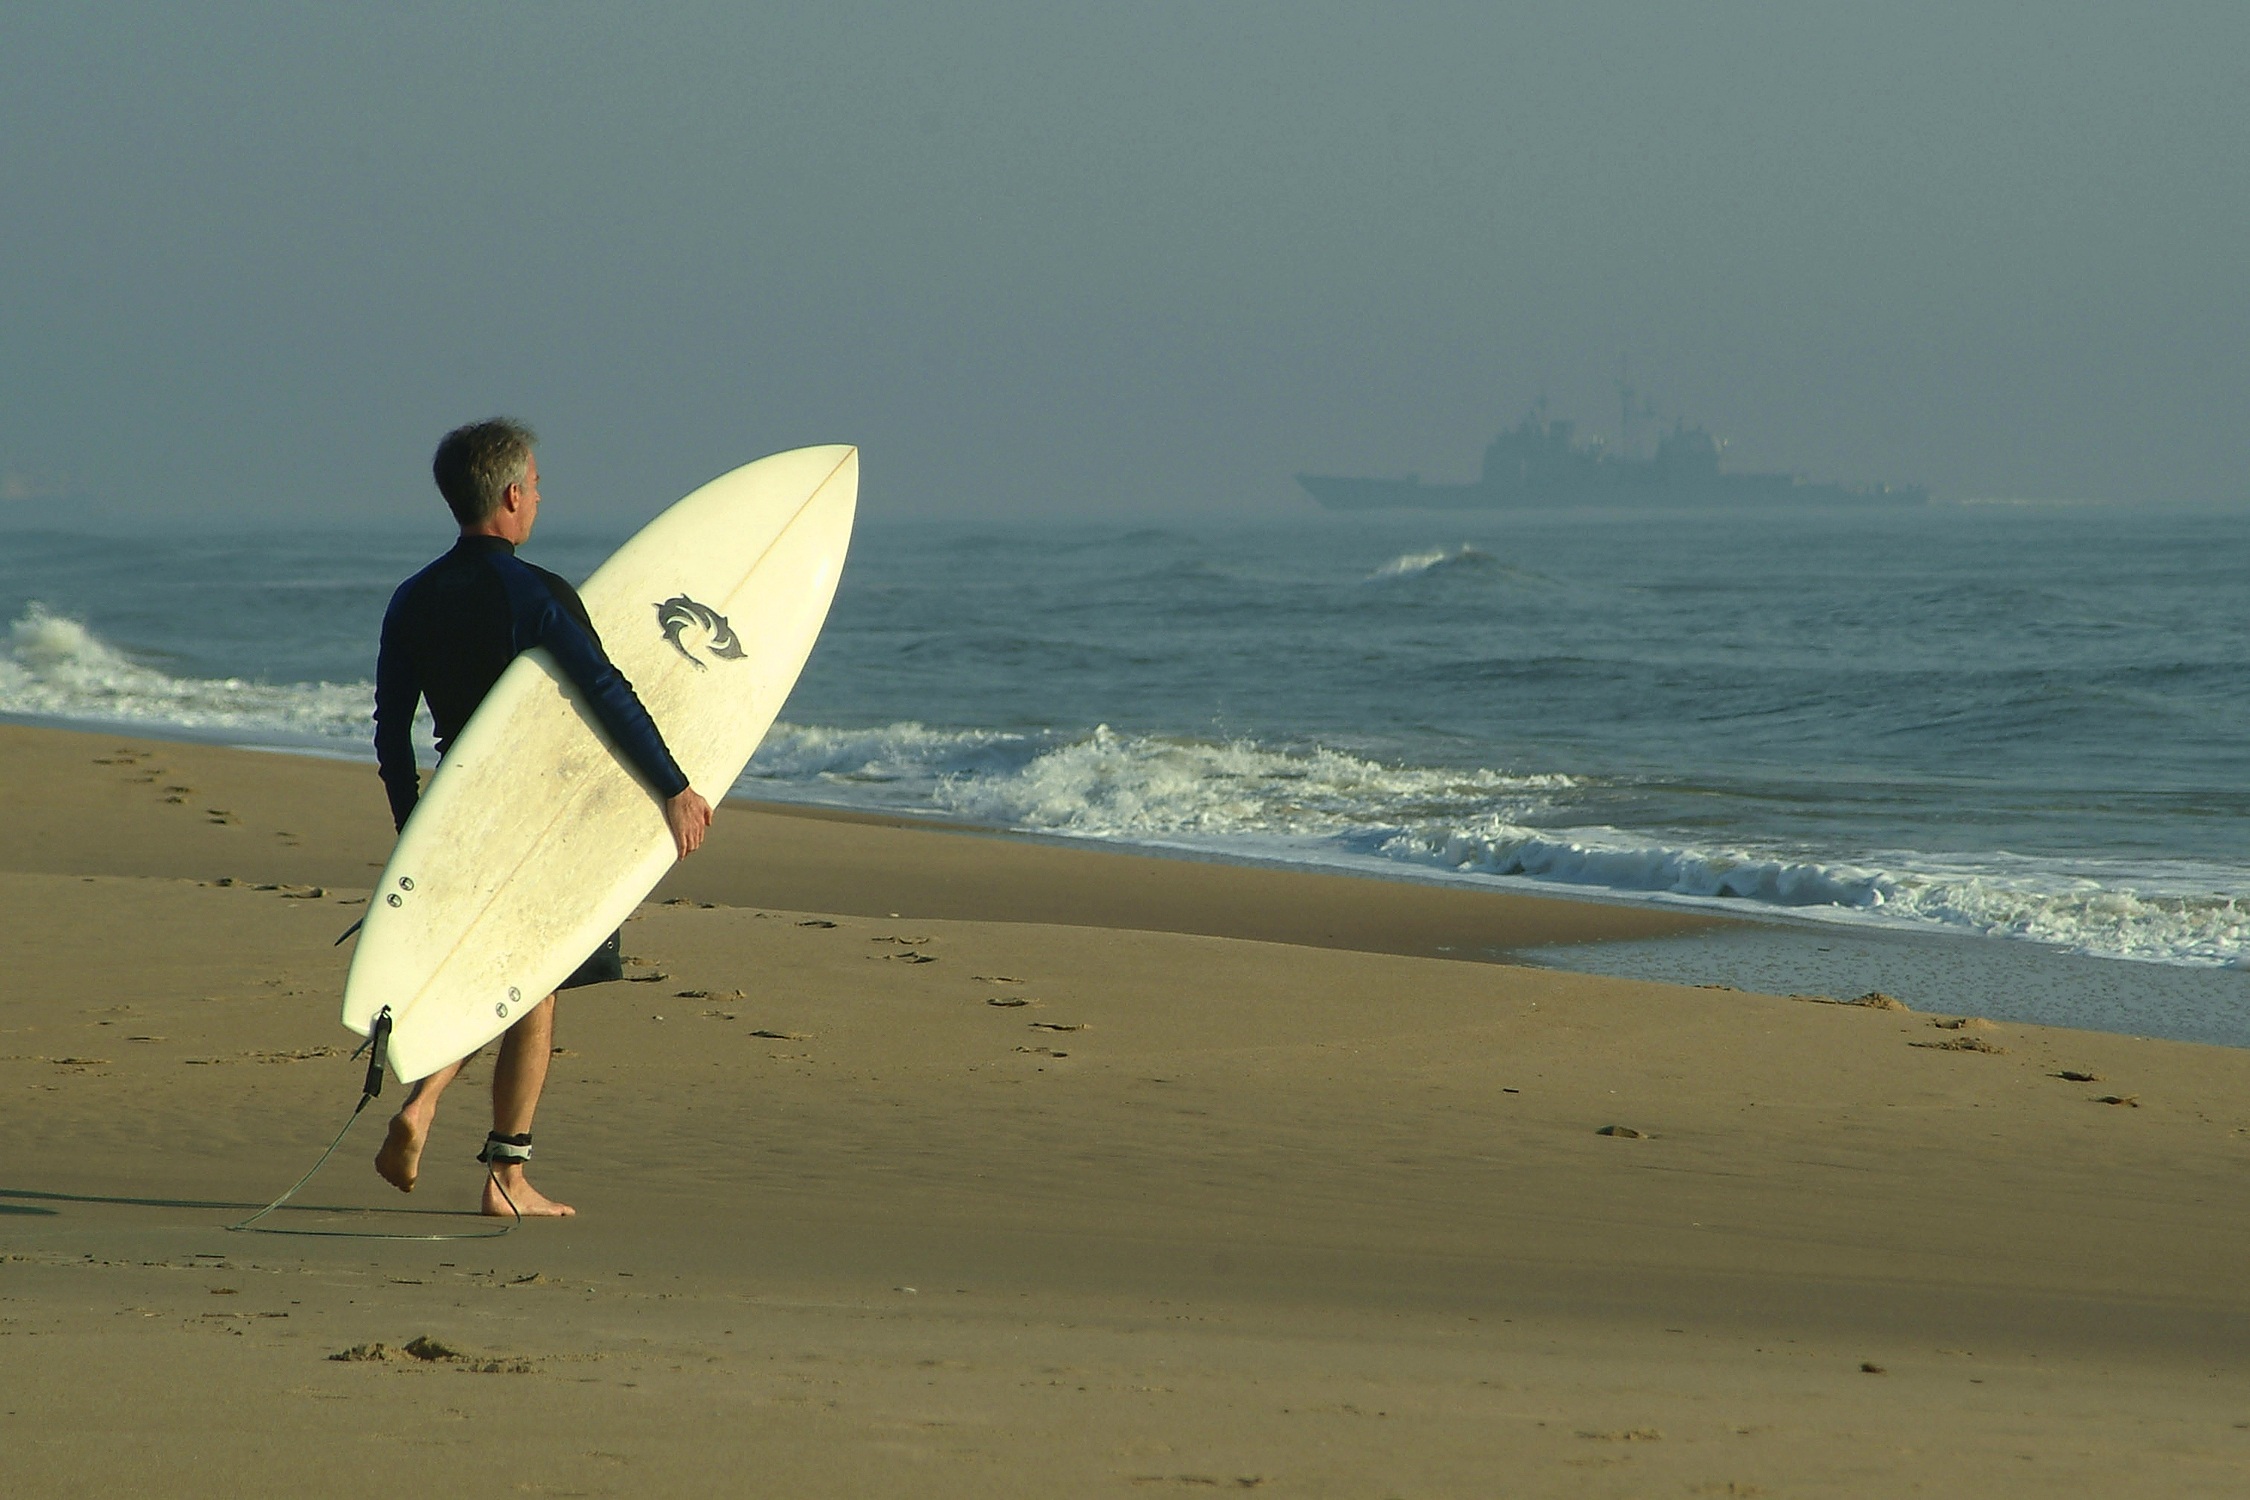 Surfer on the Beach, Activity, Beach, Blue, Human, HQ Photo